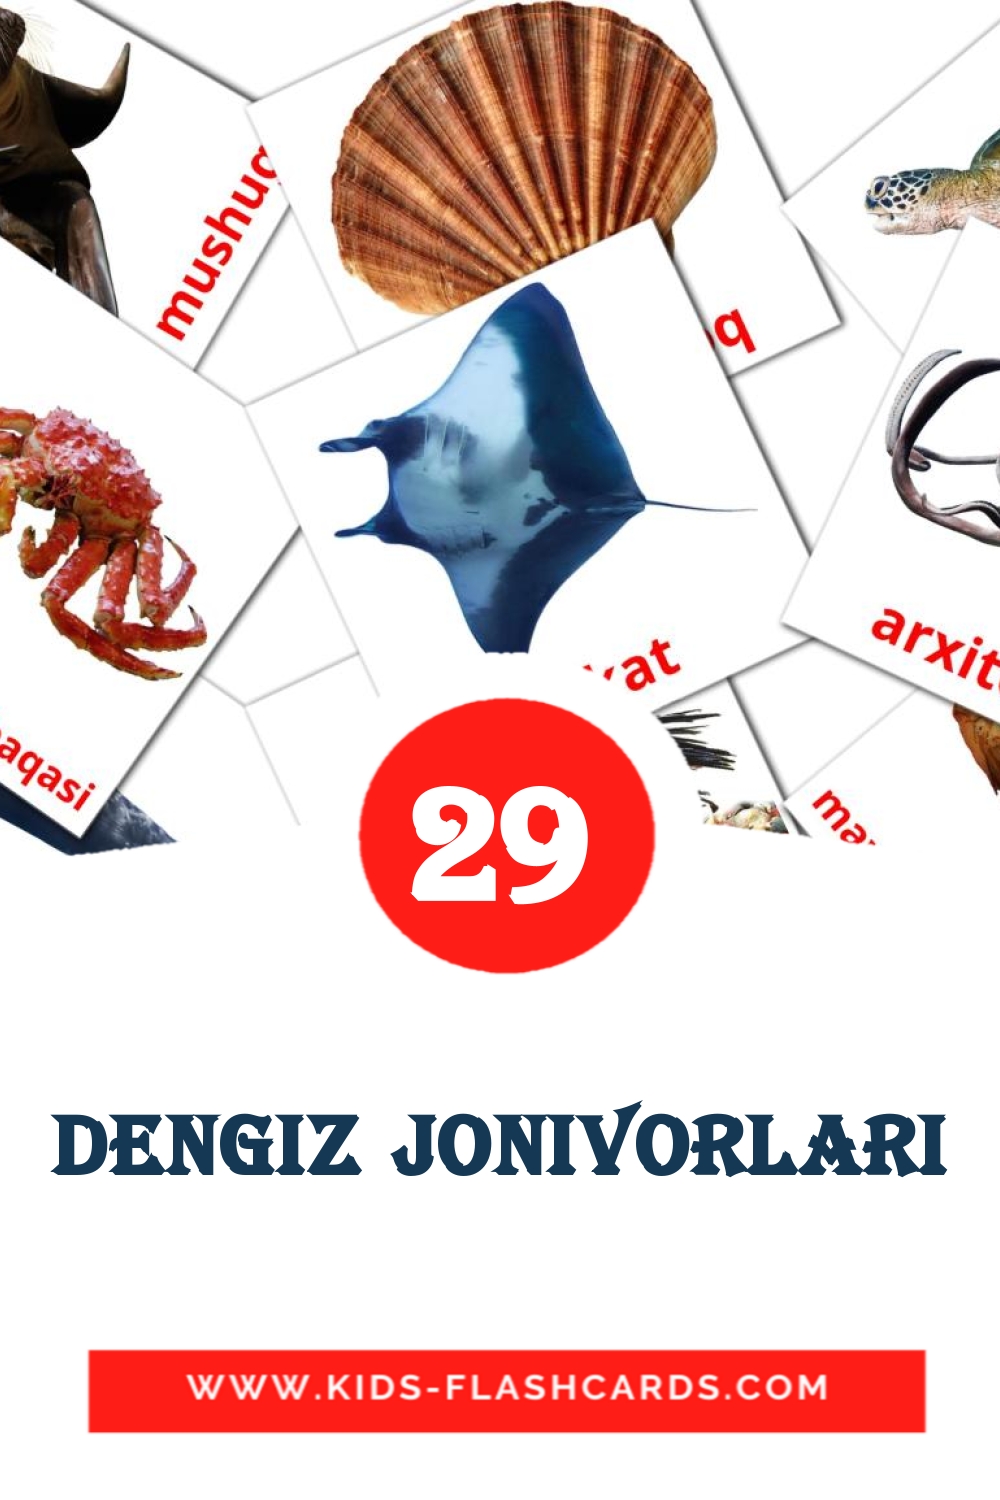 29 Dengiz jonivorlari Picture Cards for Kindergarden in uzbek